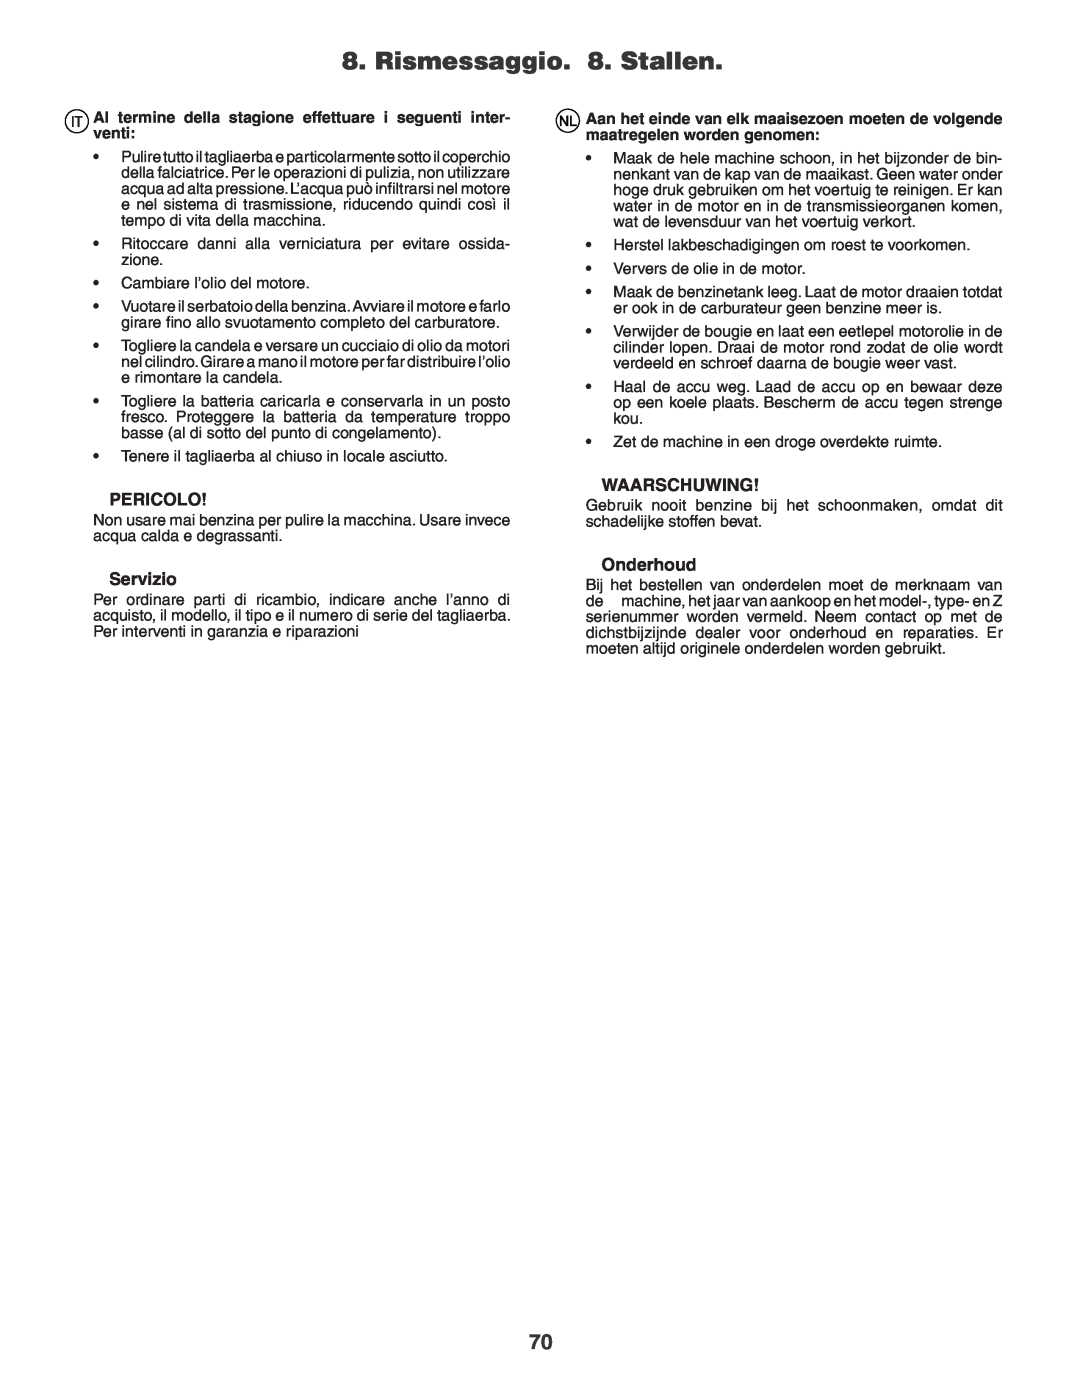 Husqvarna YTH180XP instruction manual Rismessaggio. 8. Stallen, Pericolo, Servizio, Waarschuwing, Onderhoud 